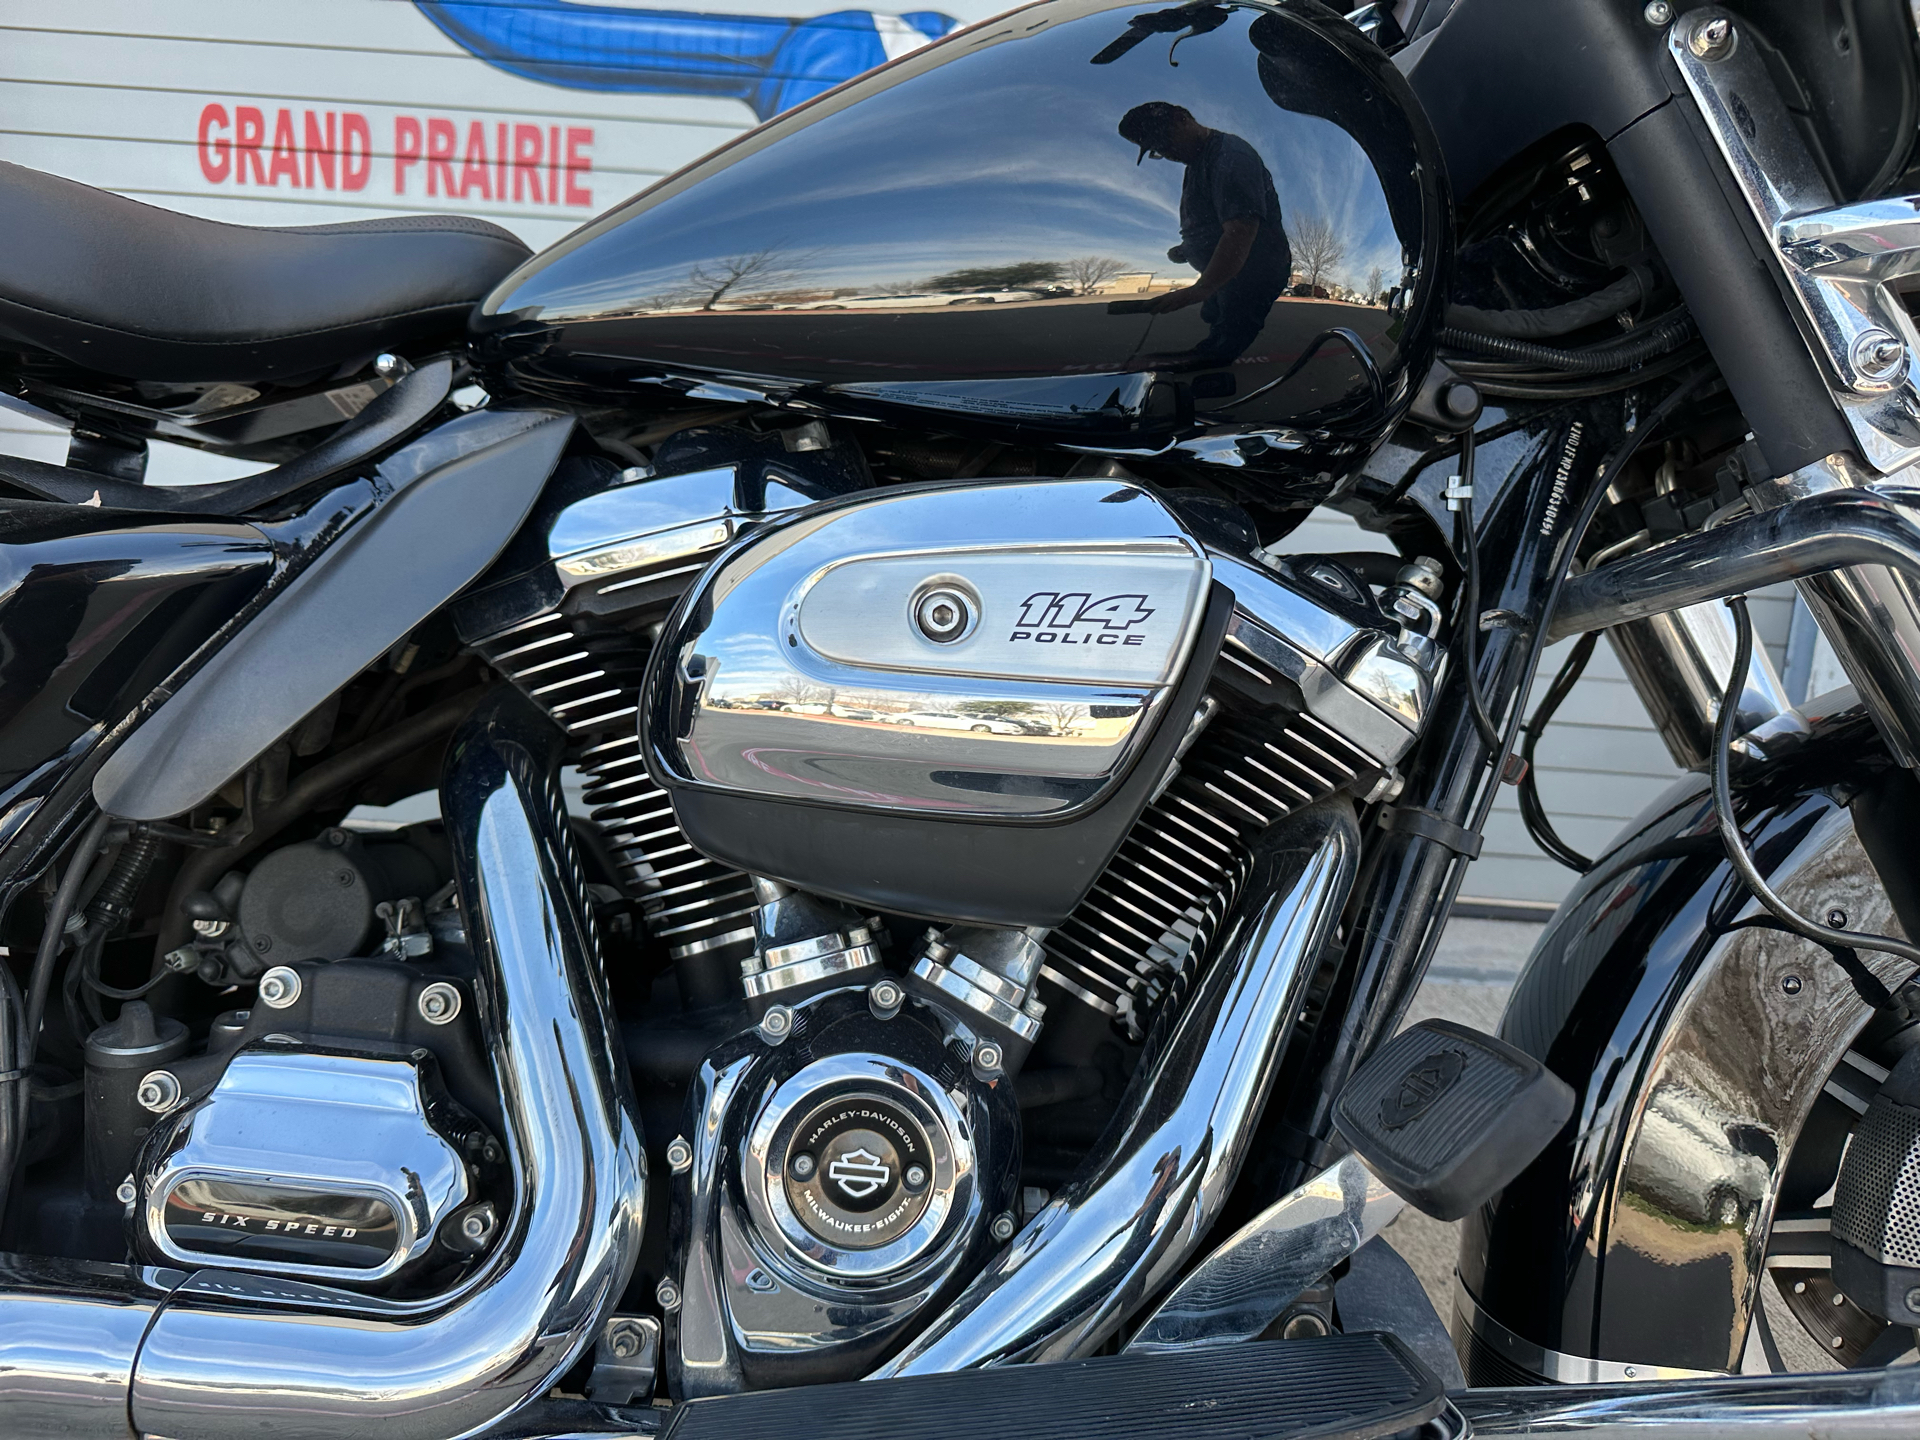 2019 Harley-Davidson Police Electra Glide Standard in Grand Prairie, Texas - Photo 4